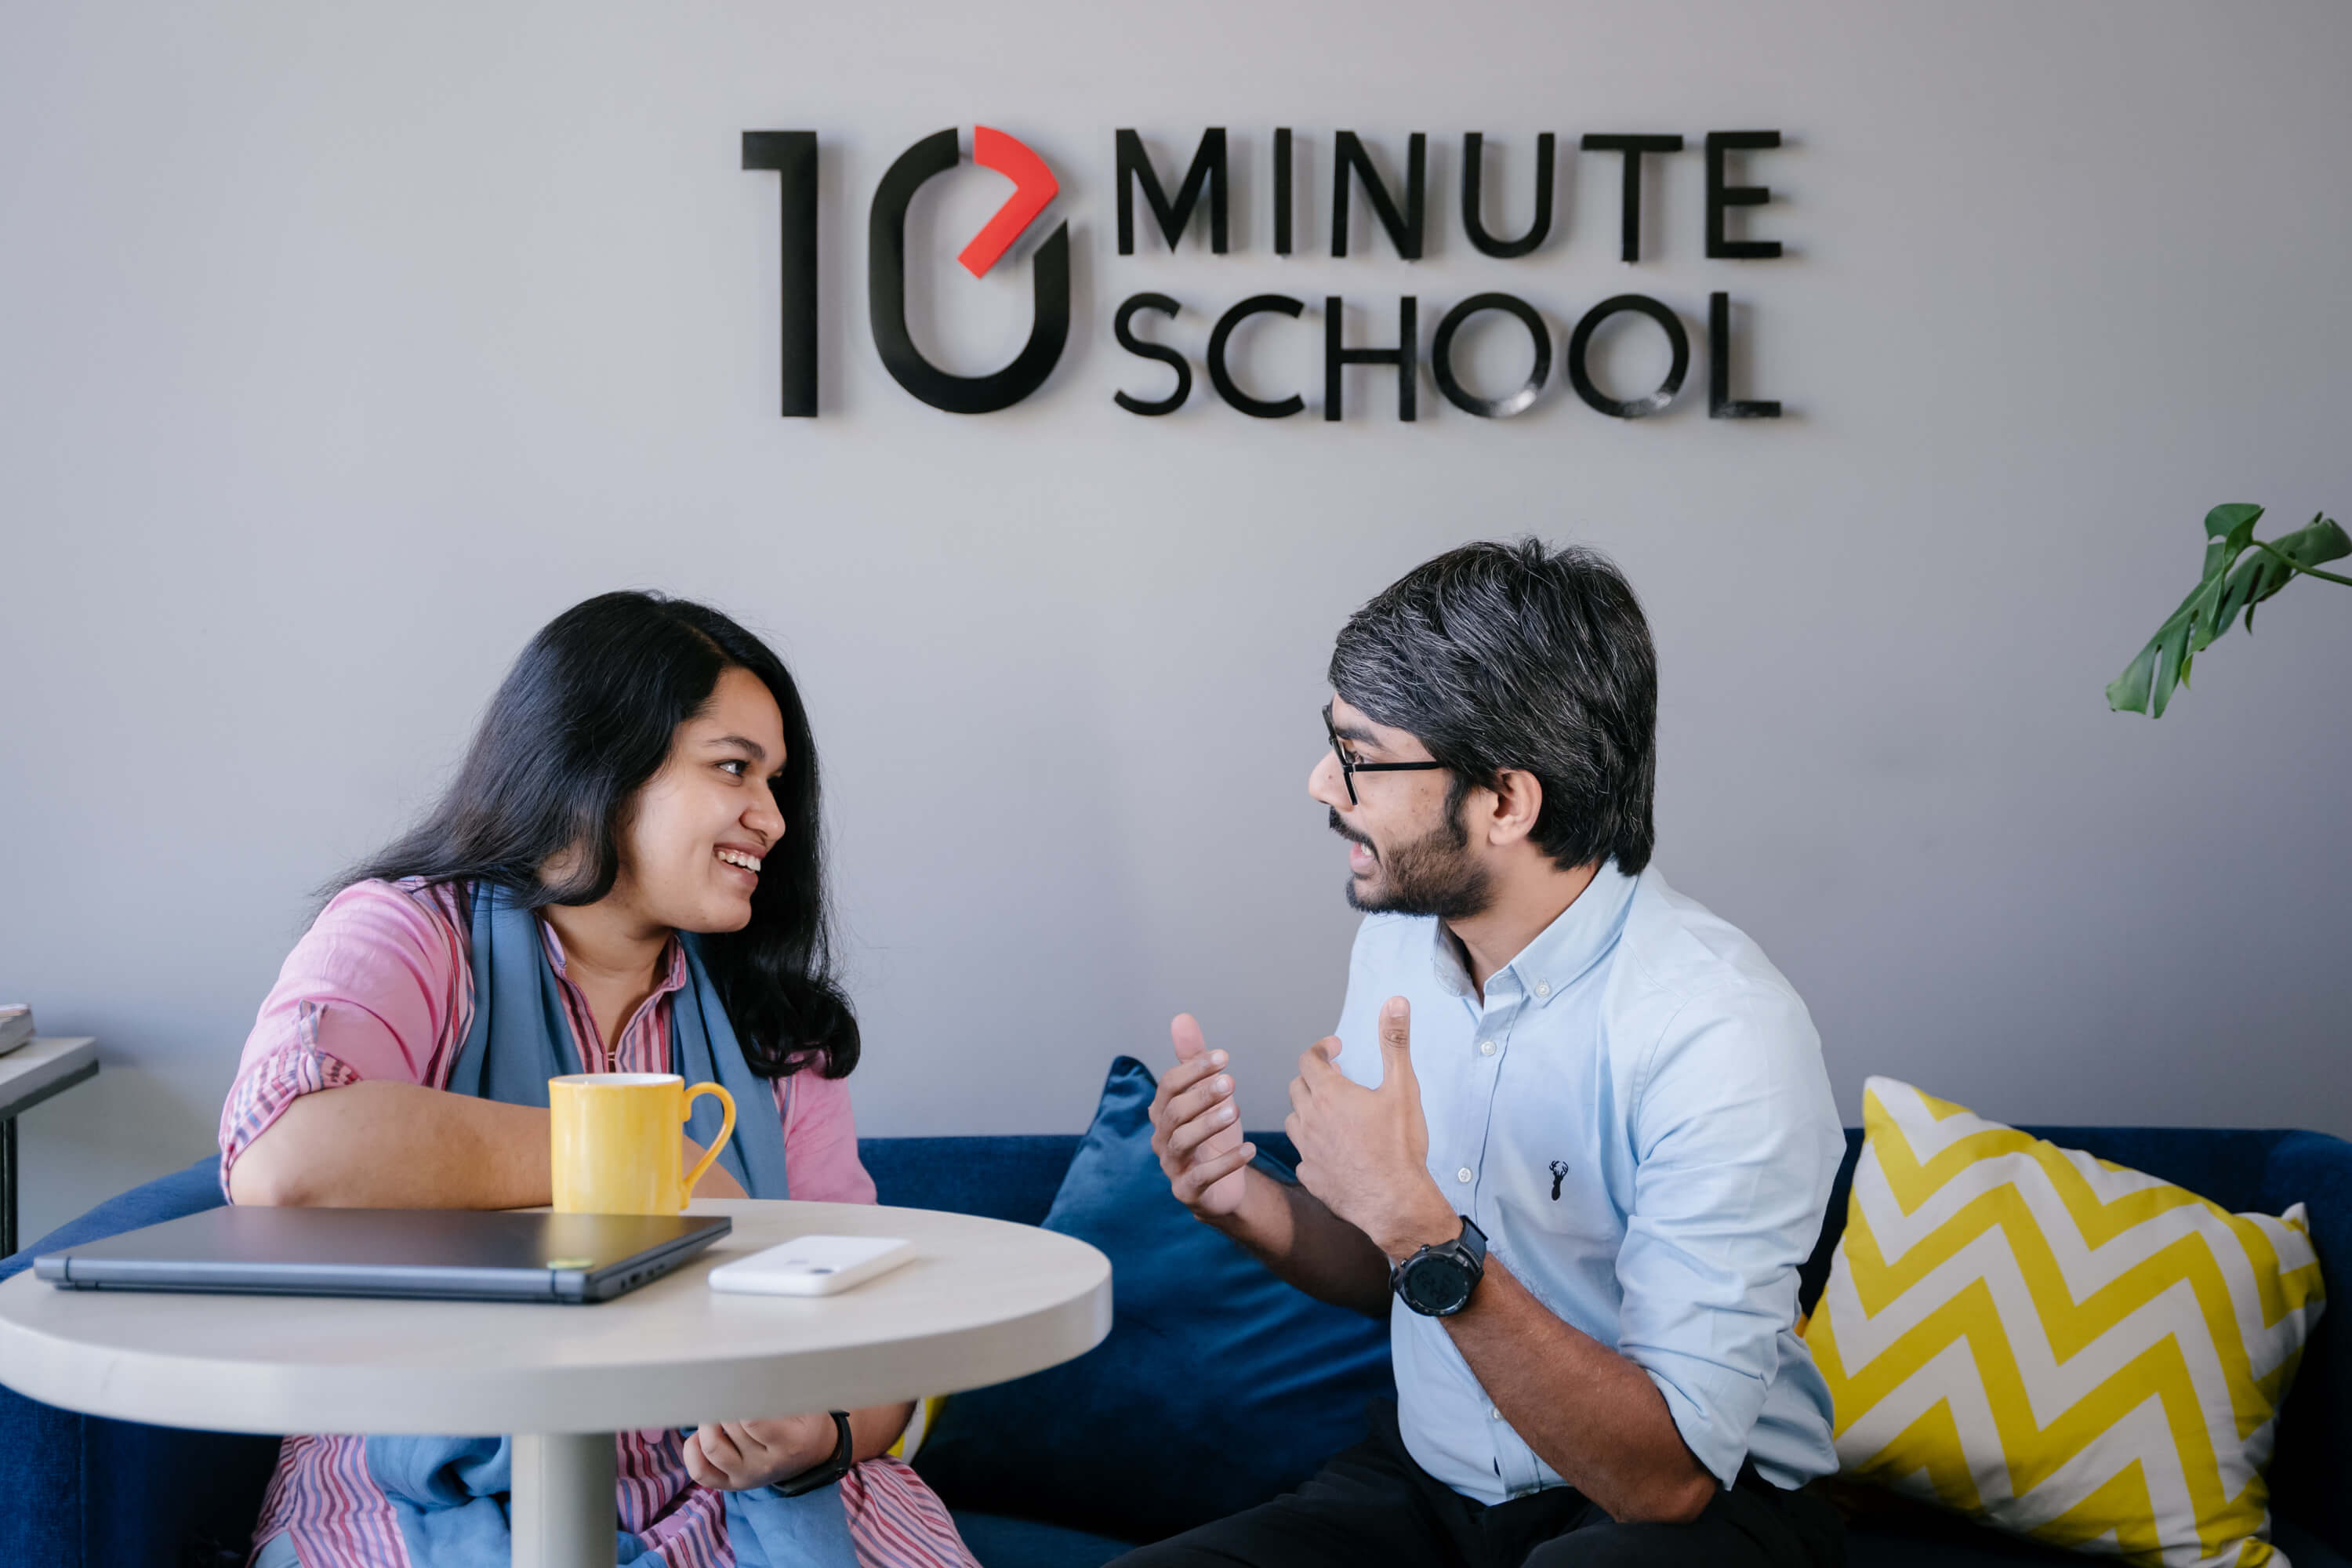 10 Minute School: Revolutionizing Education In Bangladesh